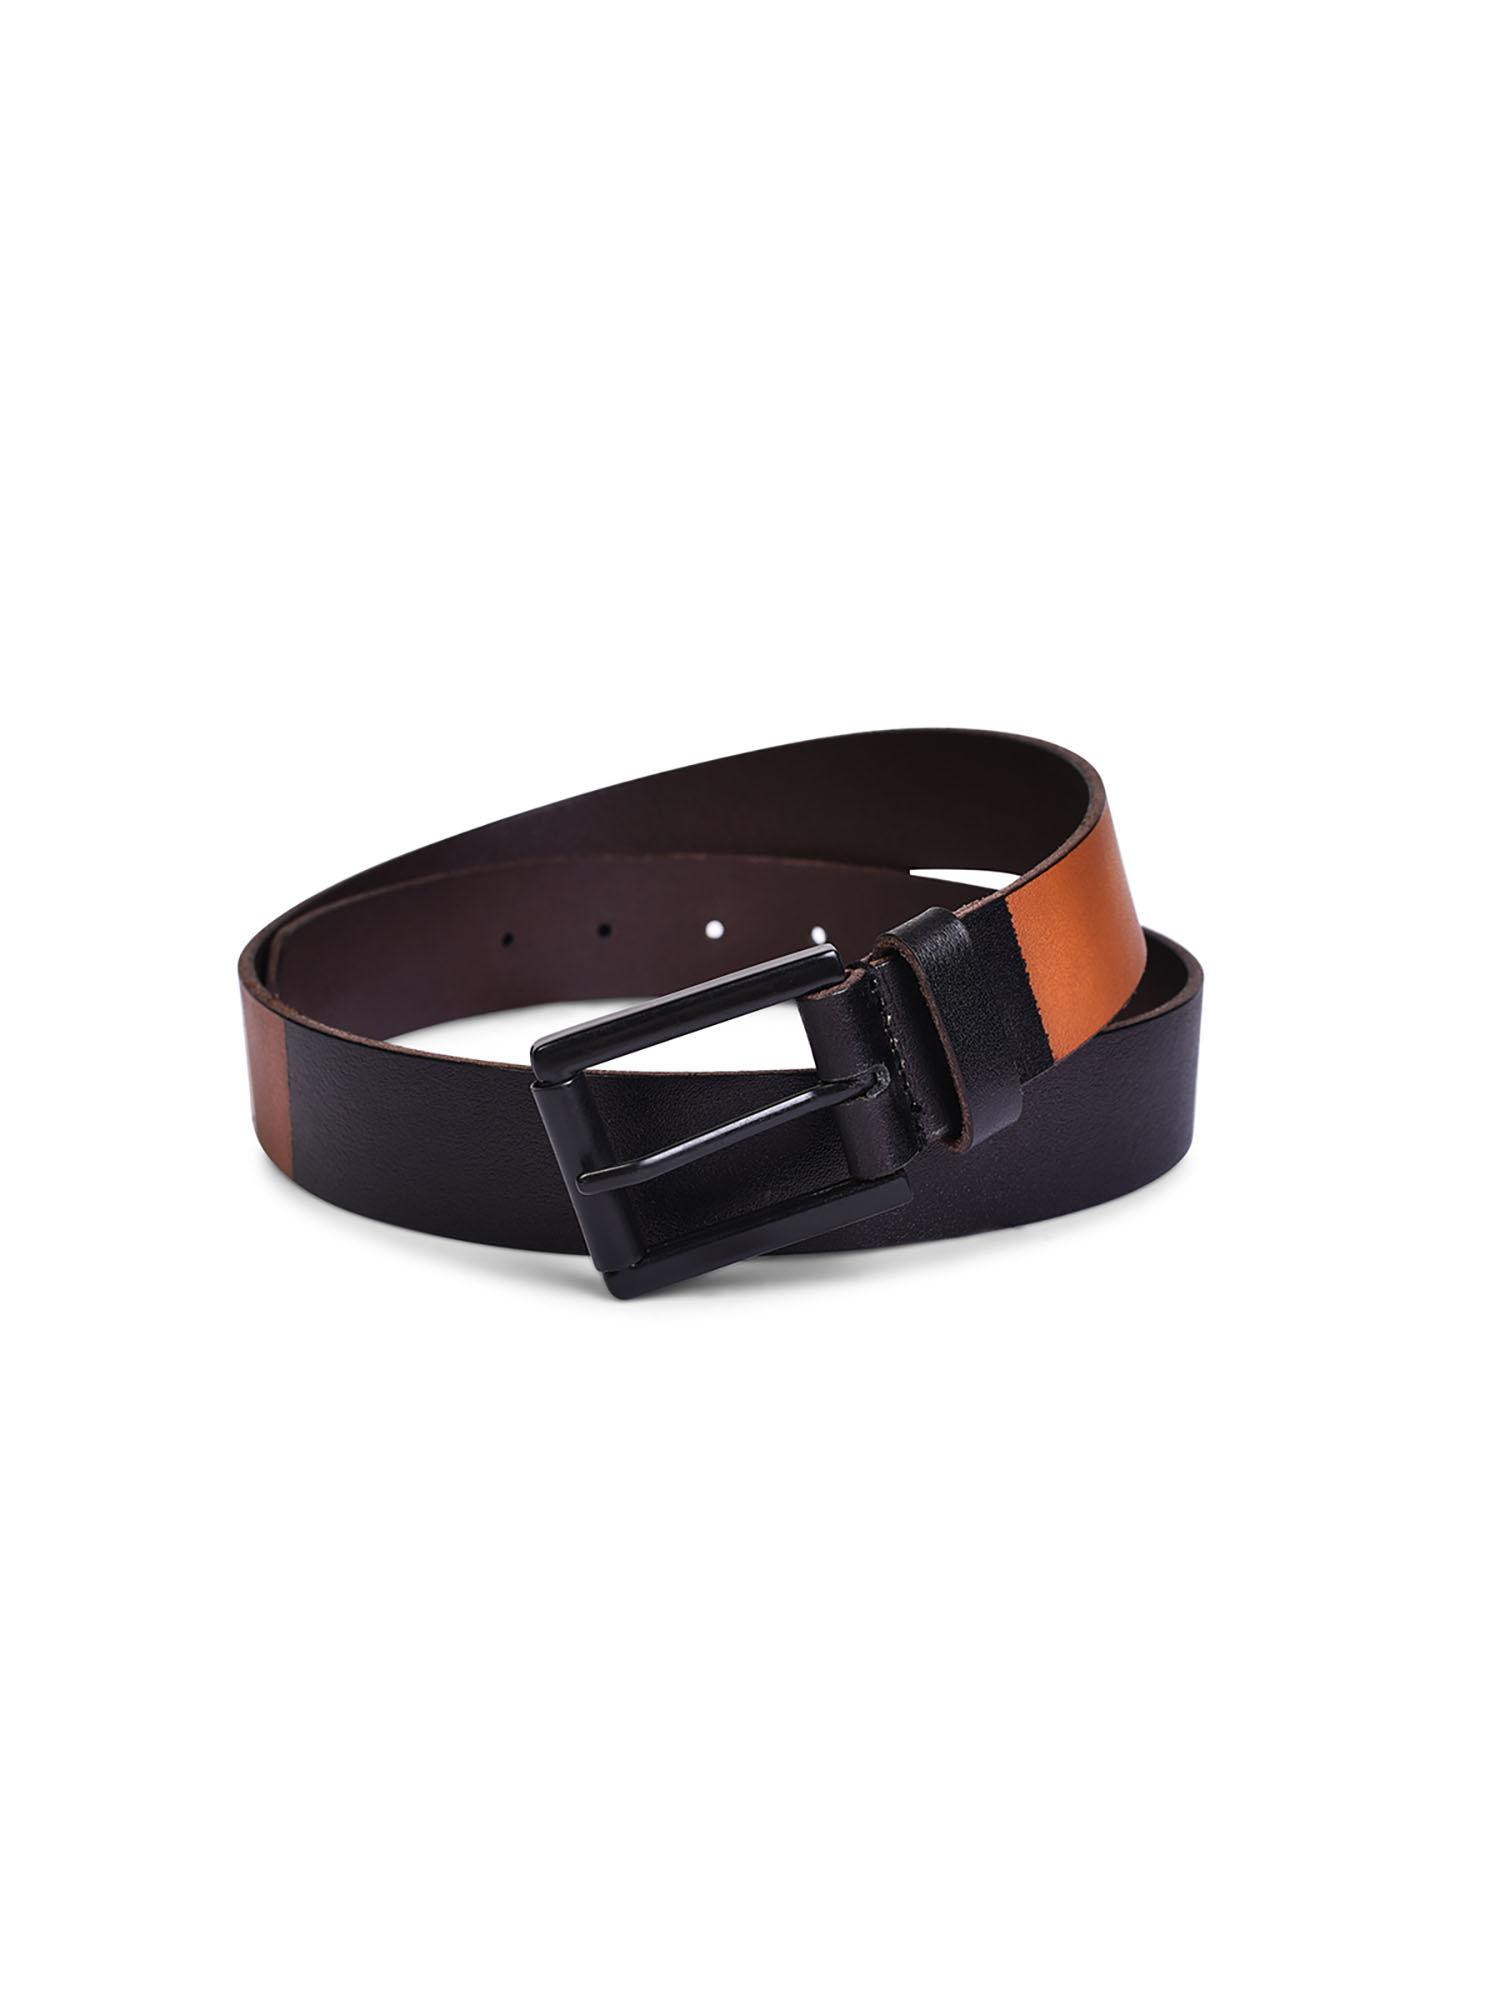 genuine leather black & tan men's belt with roller black coated finished buckle.